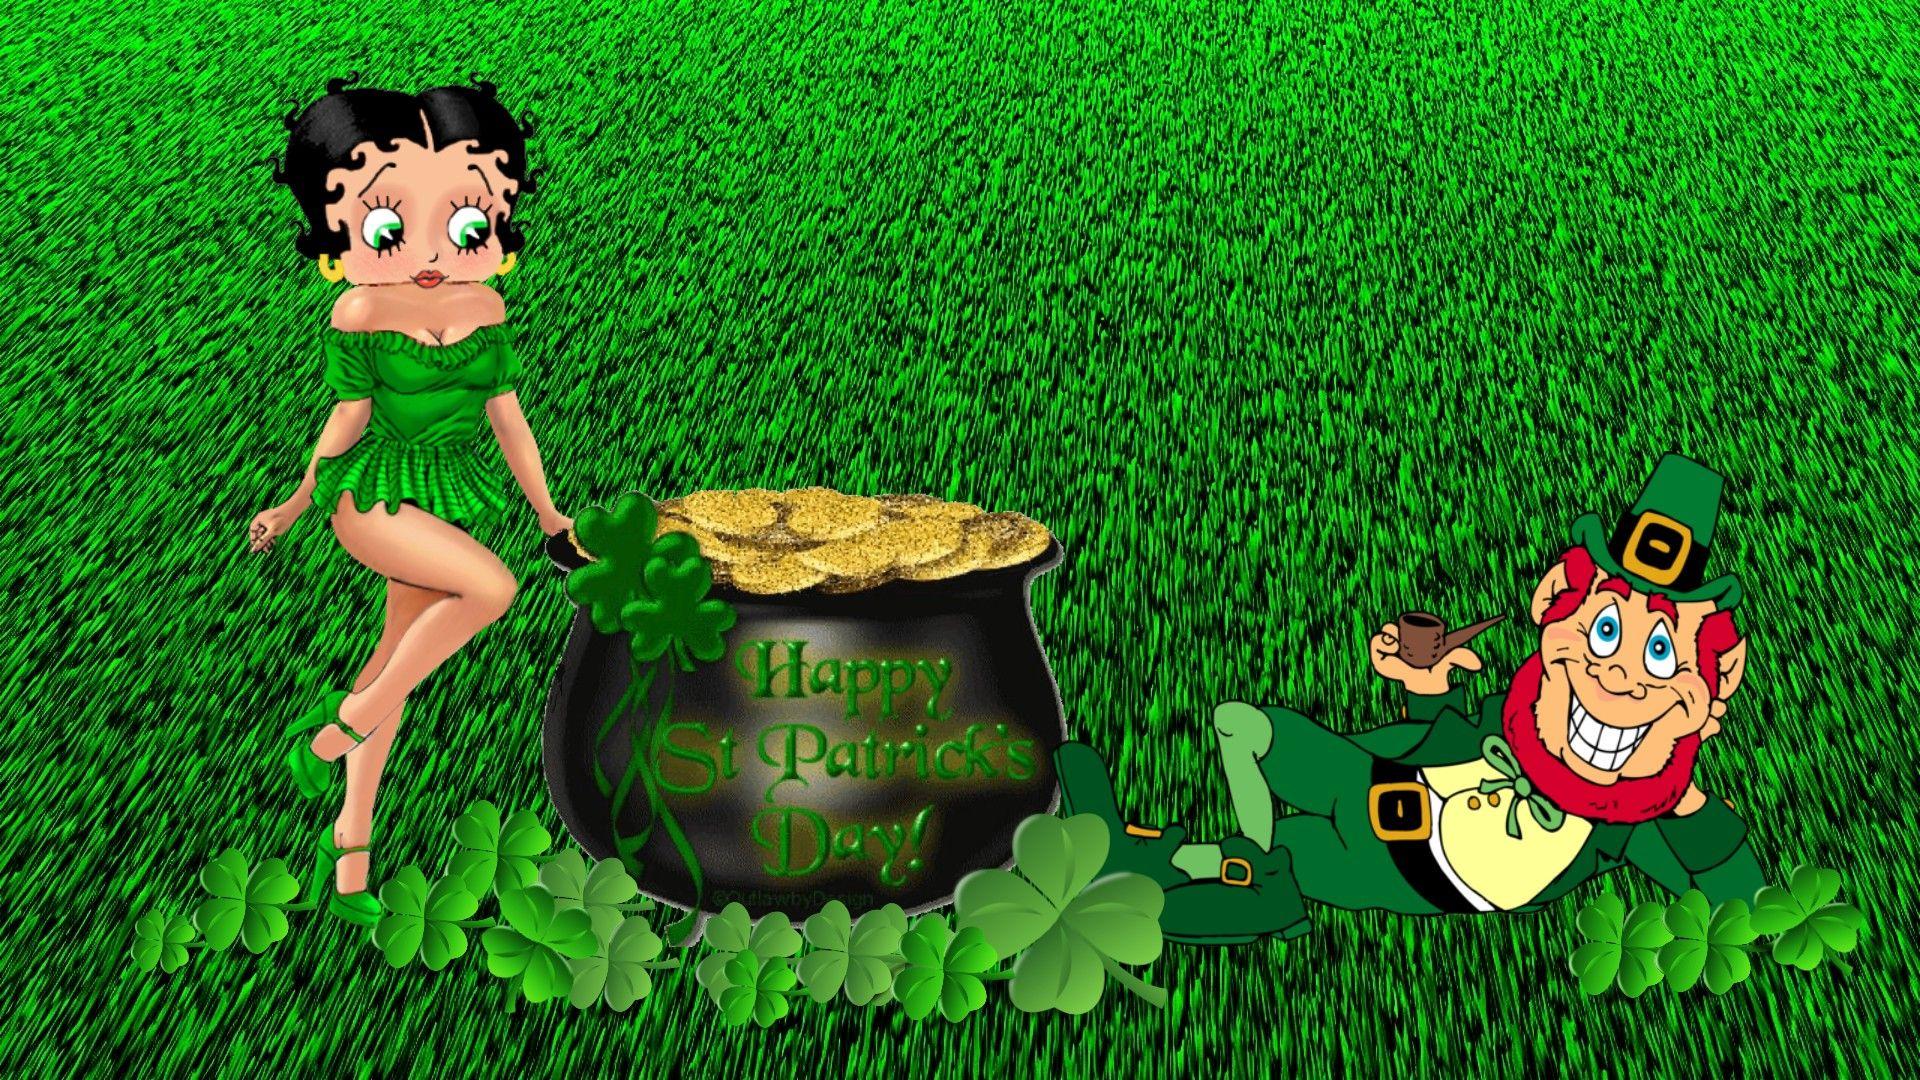 St. Patrick's Day Full HD Wallpaper